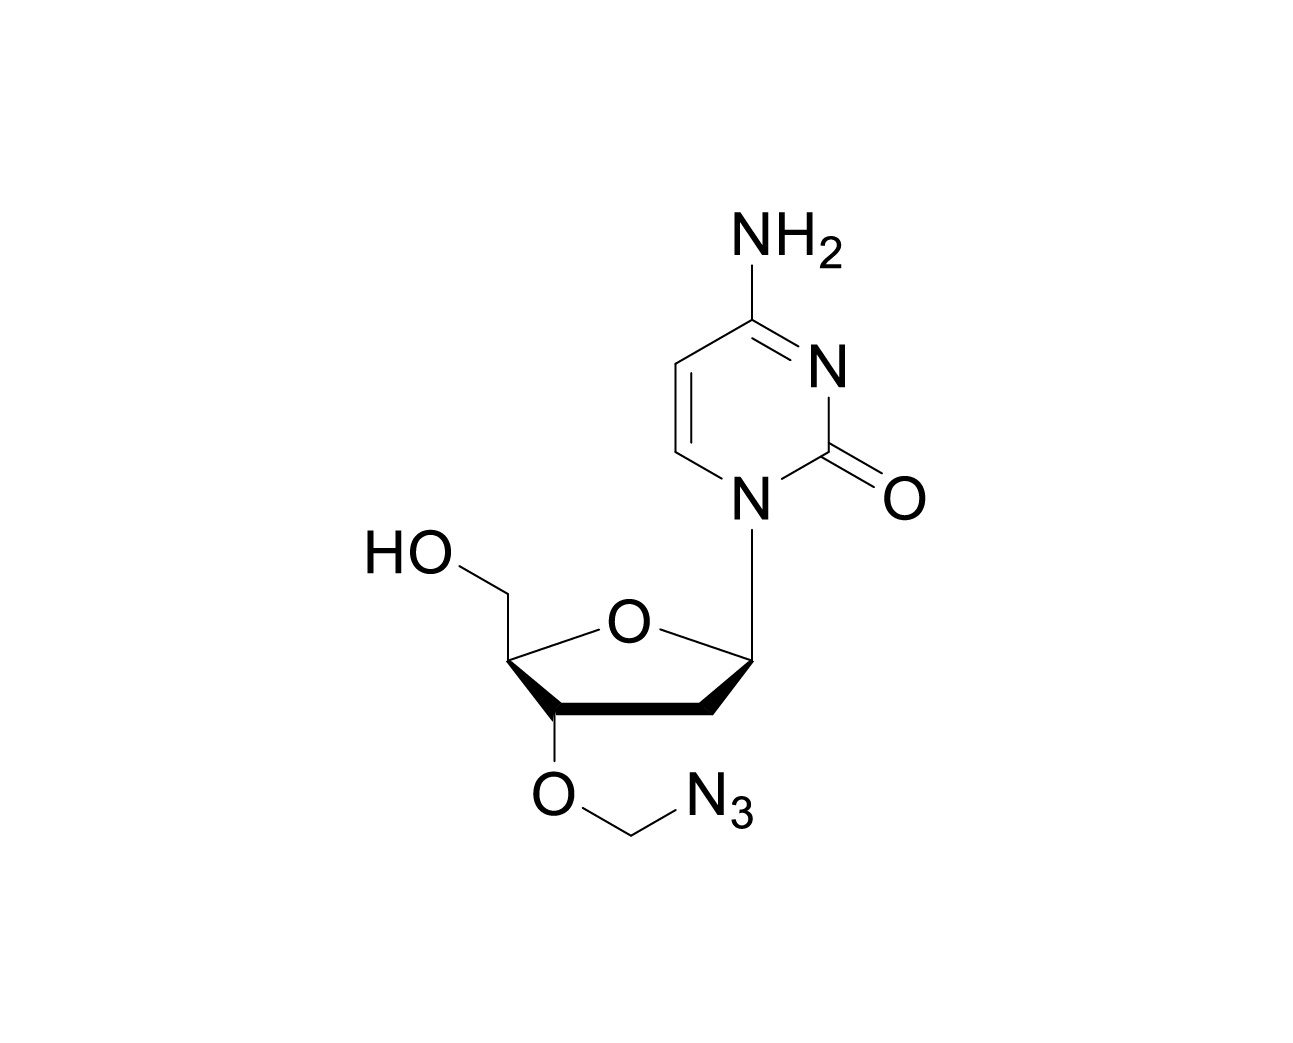 3'-O-azidomethylene-dC